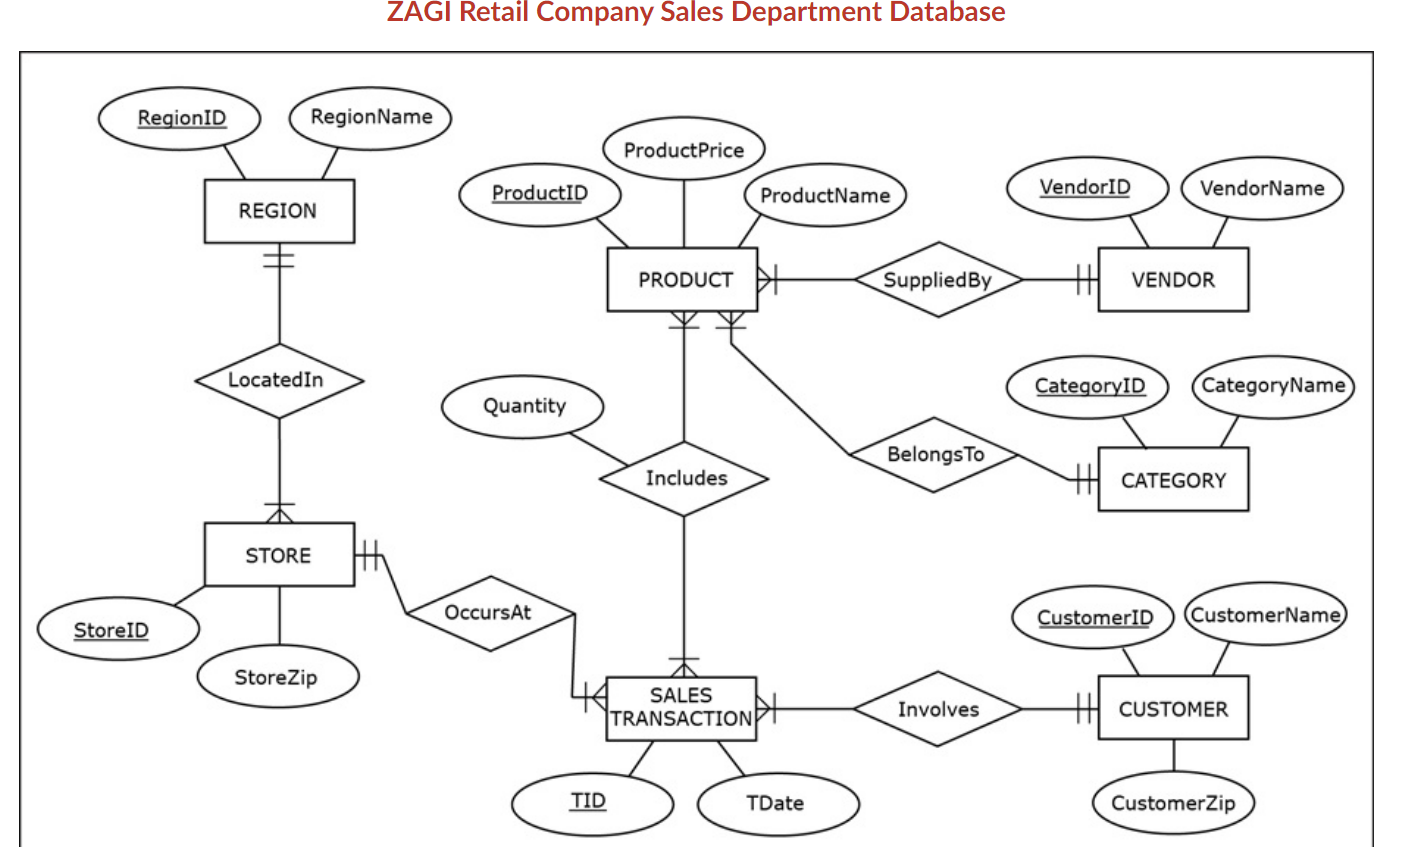 ZAGI Retail Company Sales Department Database | Chegg.com